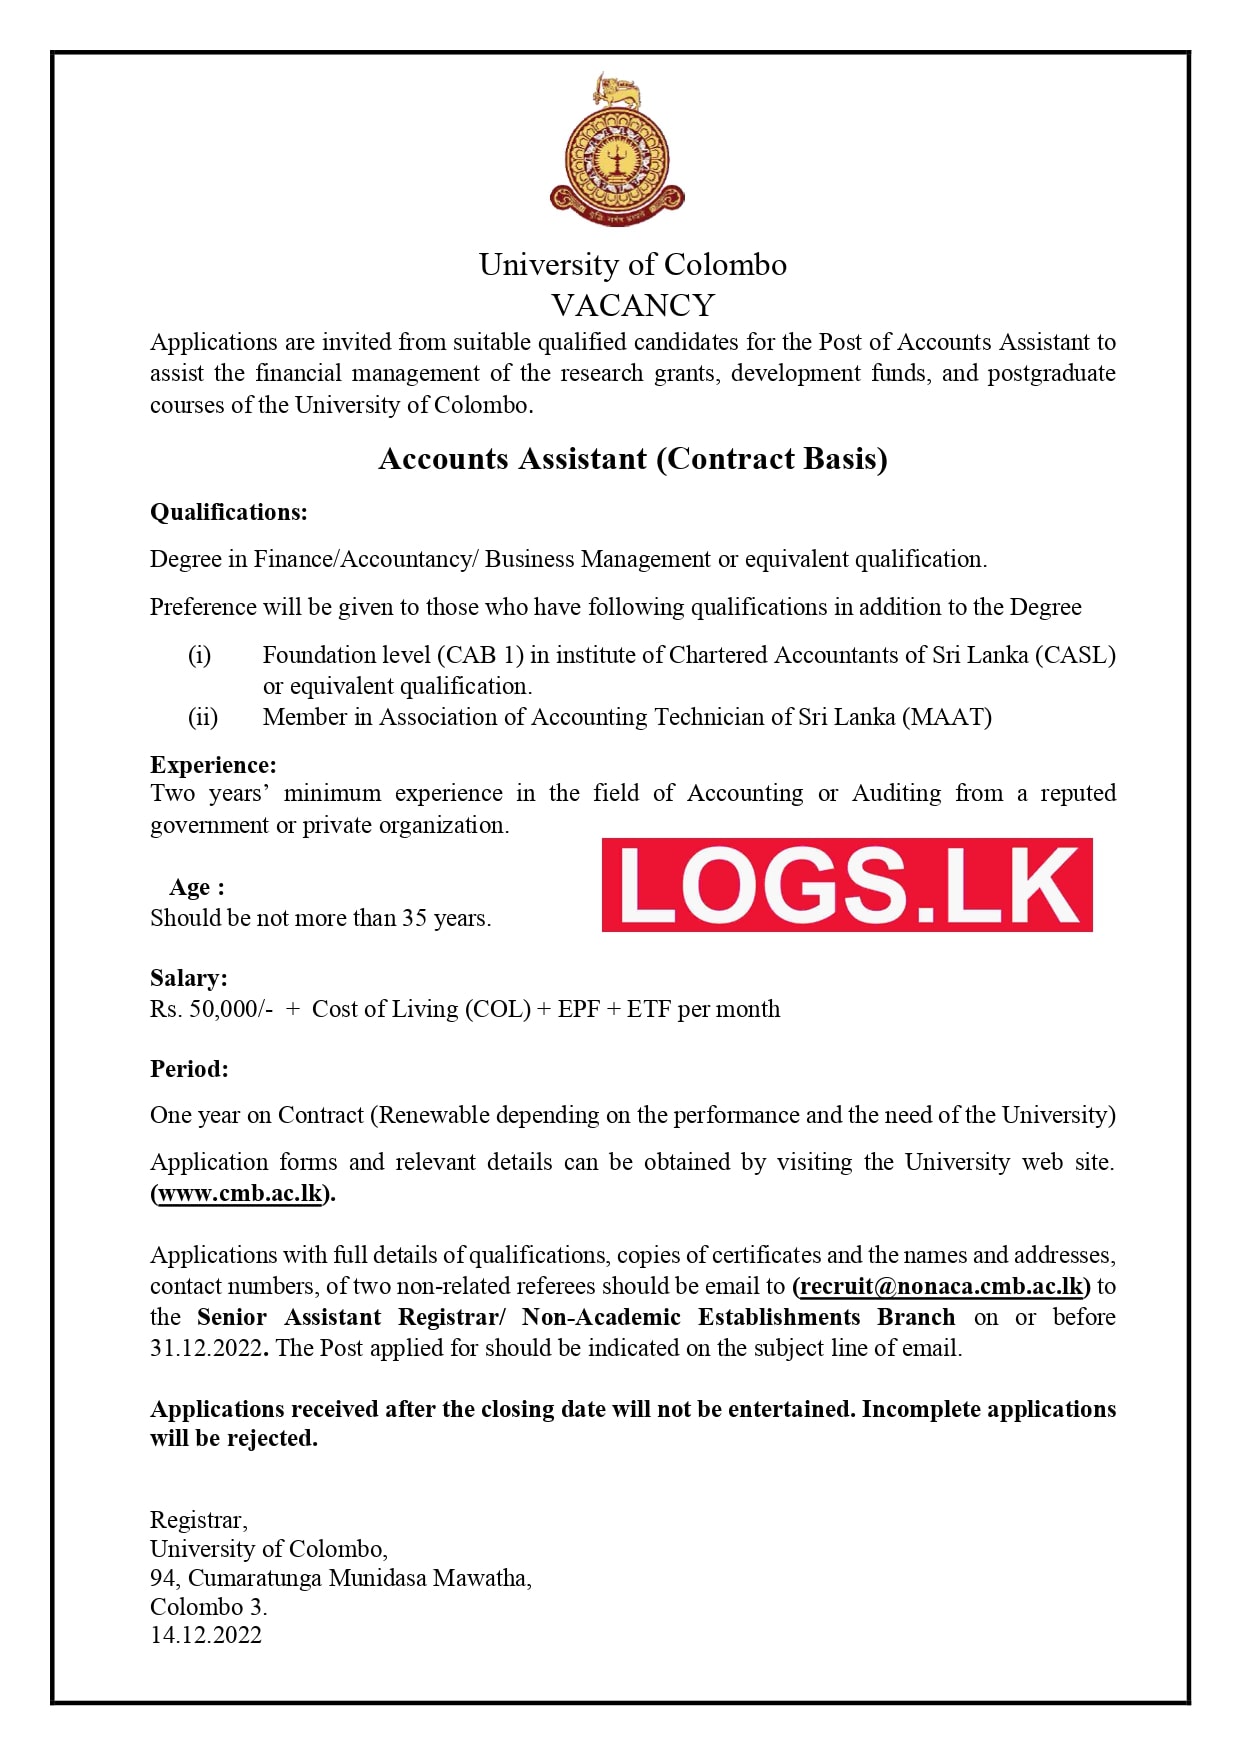 Accounts Assistant Vacancy 2023 in University of Colombo Job Vacancies Details, Application Form Download